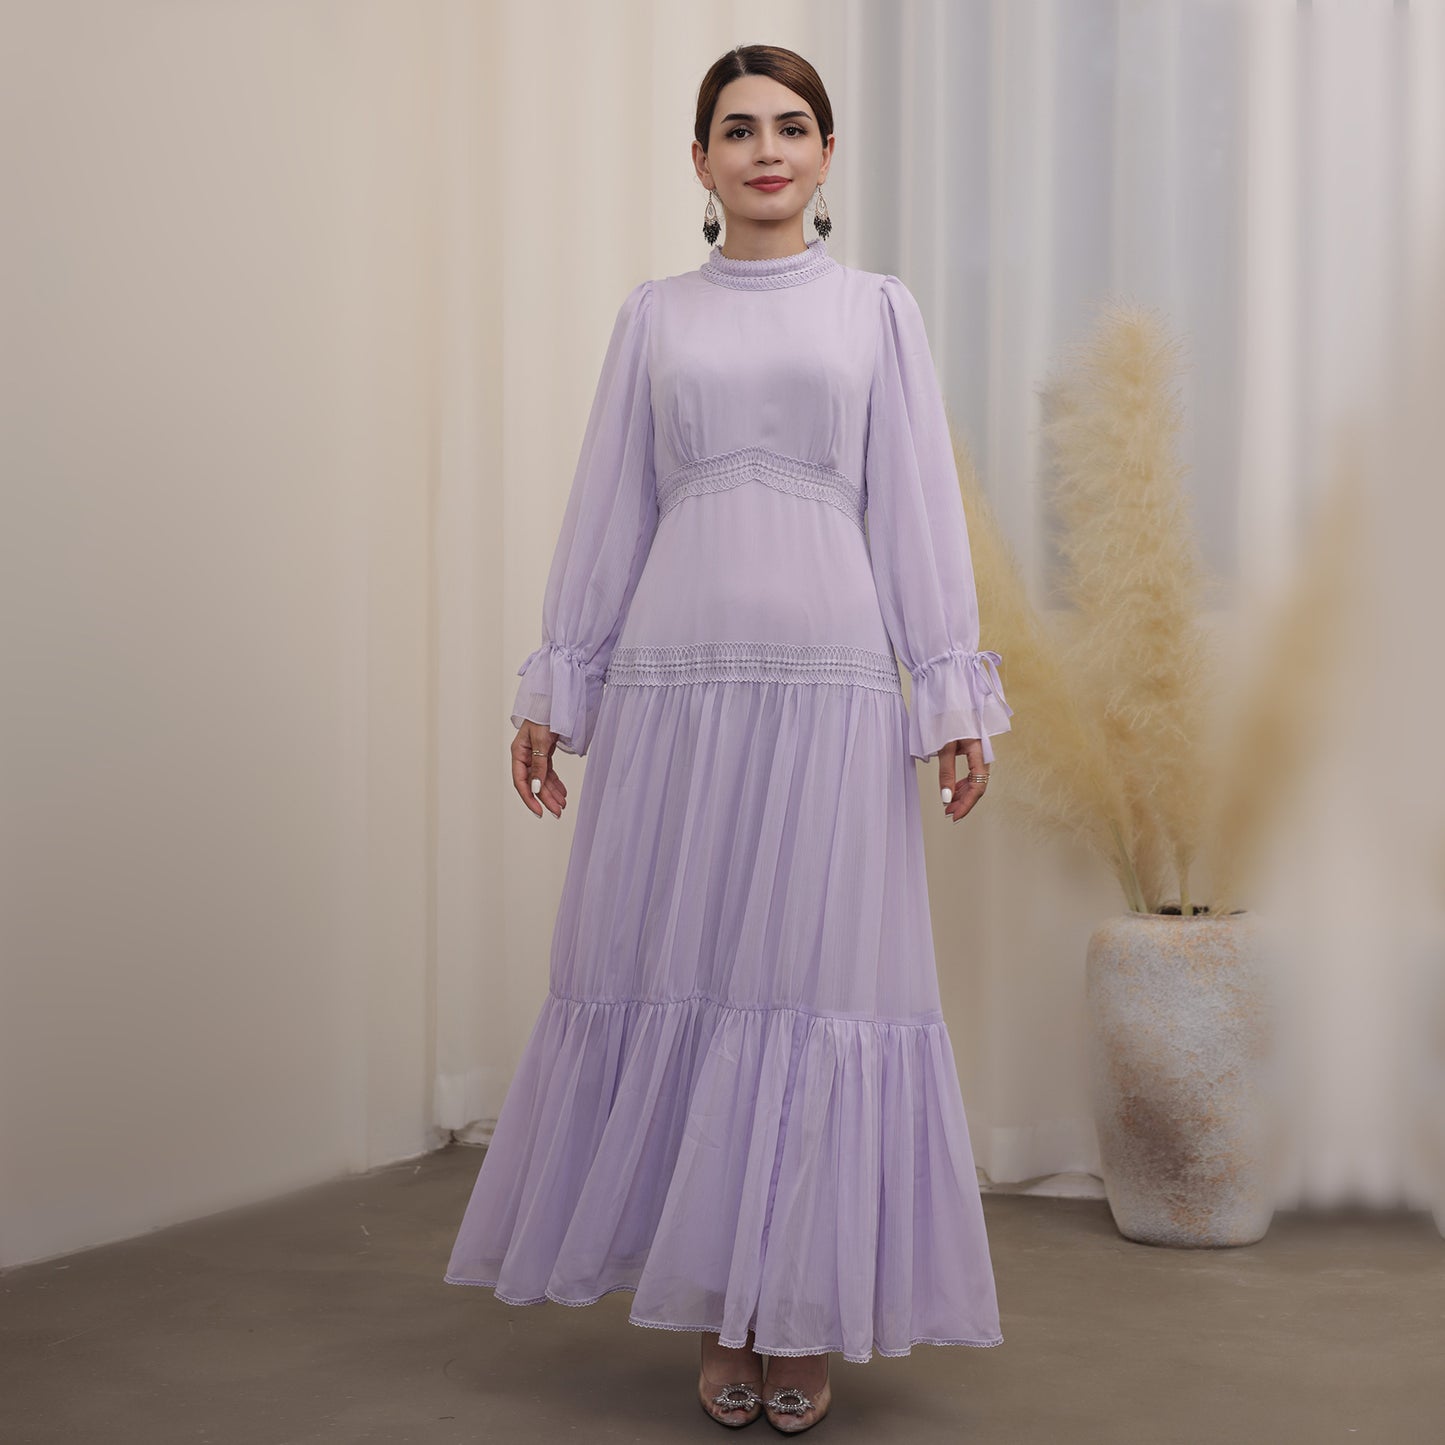 Exquisite Lace Middle East Dress Long Dress